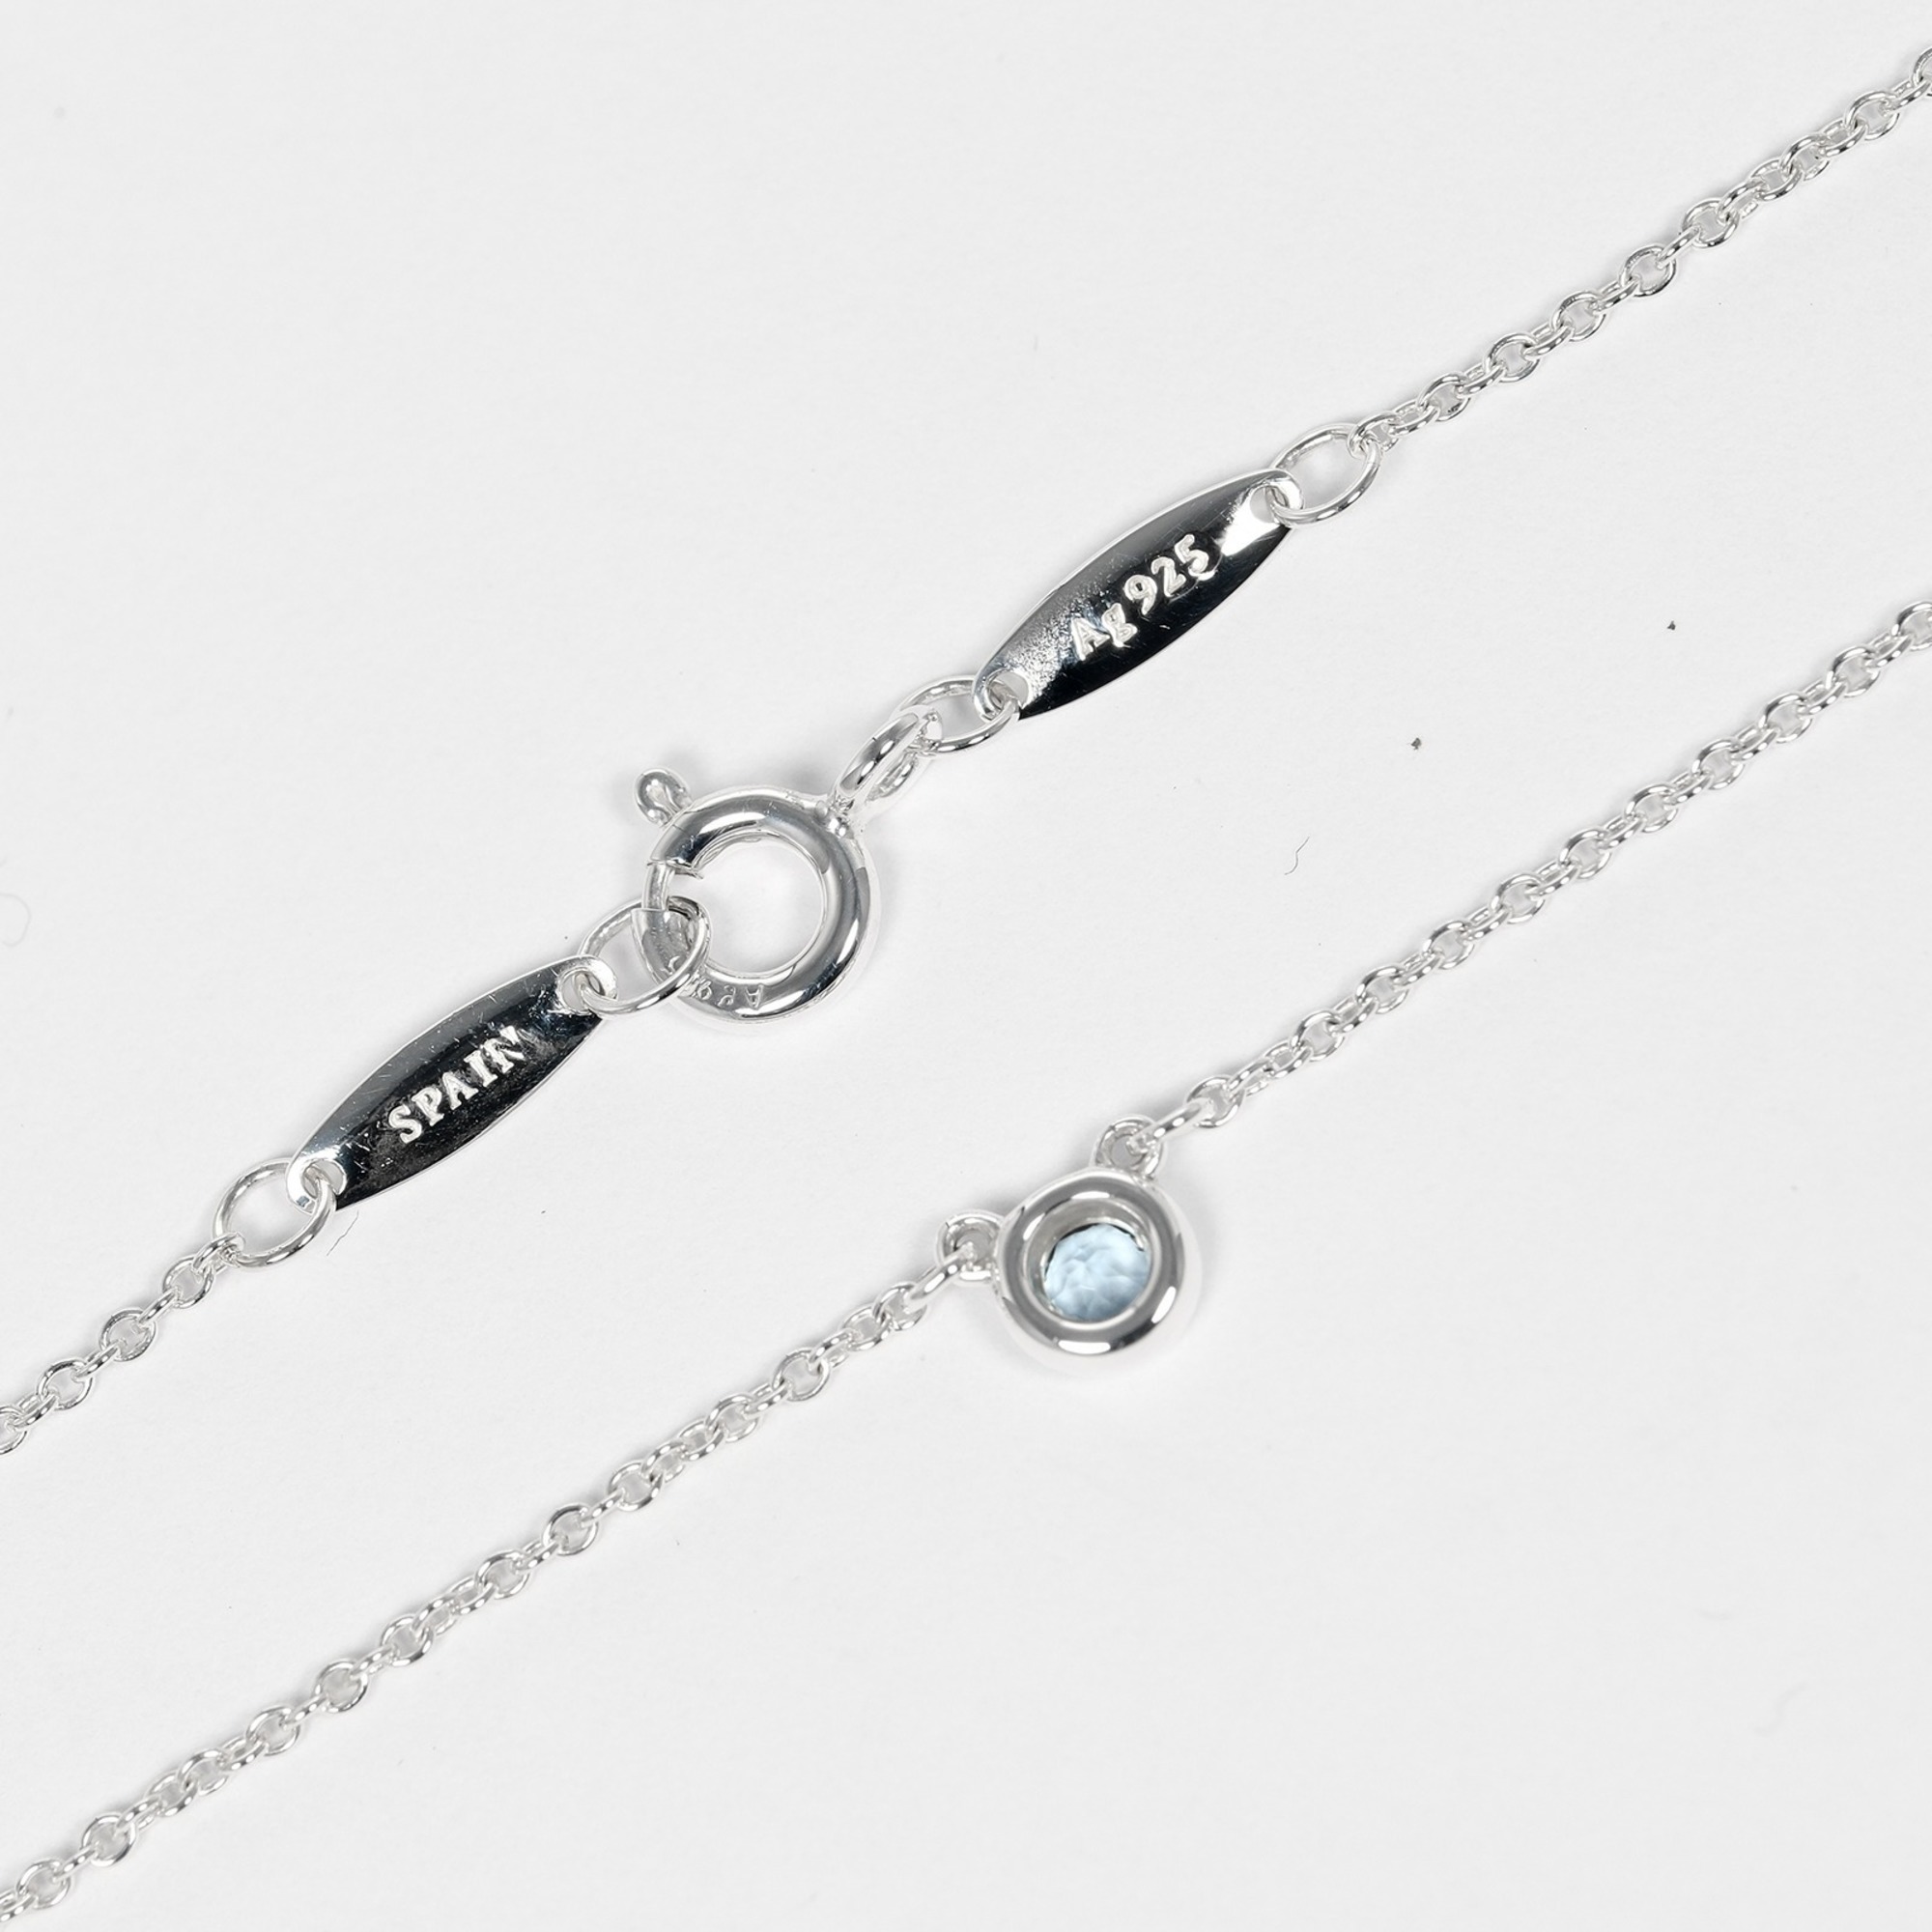 Tiffany TIFFANY&Co. Visor Yard Necklace Silver 925 Aquamarine Approx. 1.63g I112223031